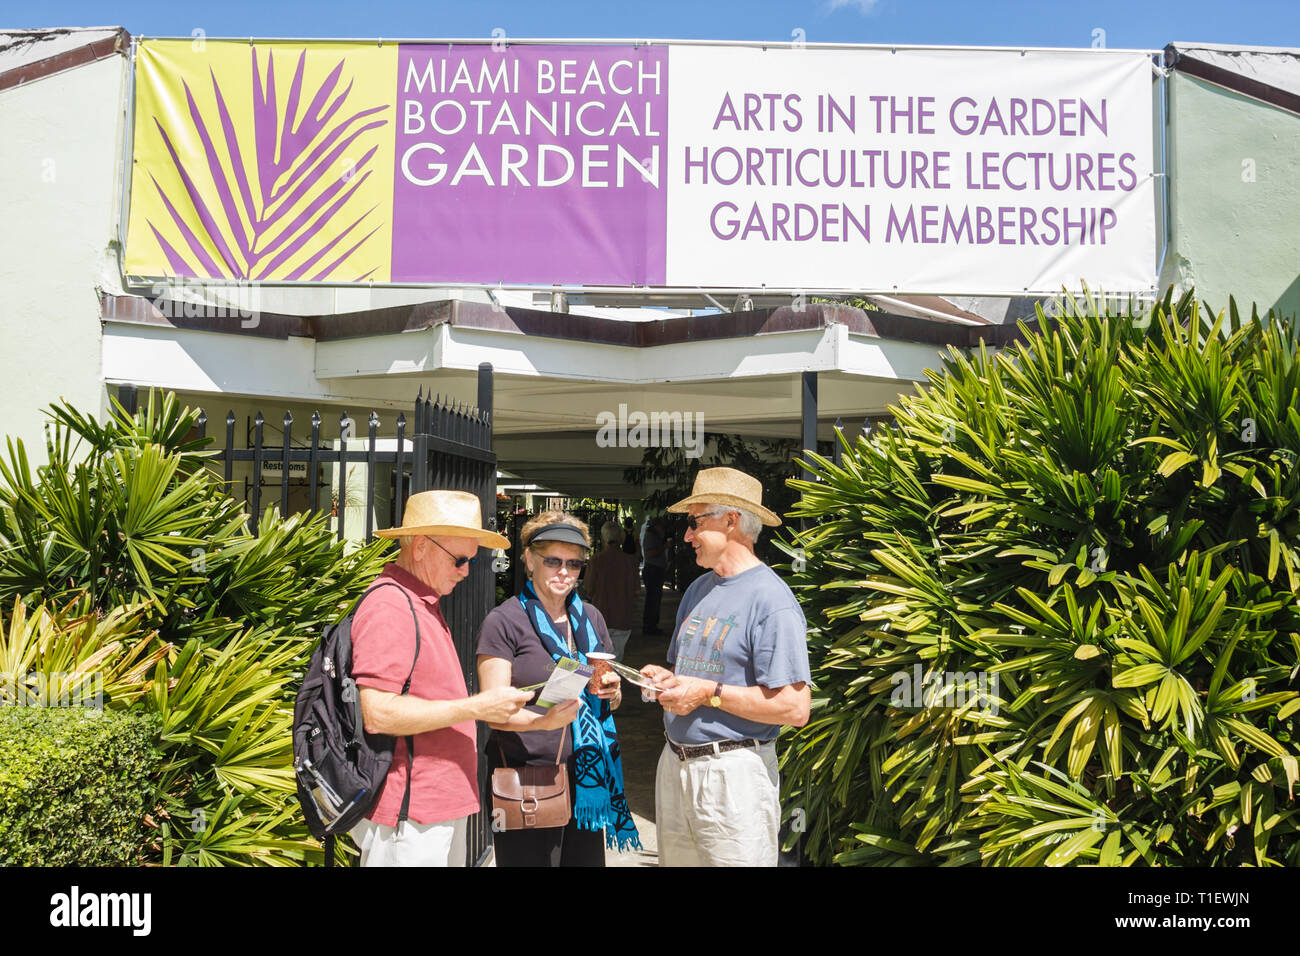 Miami Beach Florida,Botanical Garden,gardening,plants,horticulture,entrance,front,woman female women,man men male,group,banner,lecture,foliage,FL09030 Stock Photo